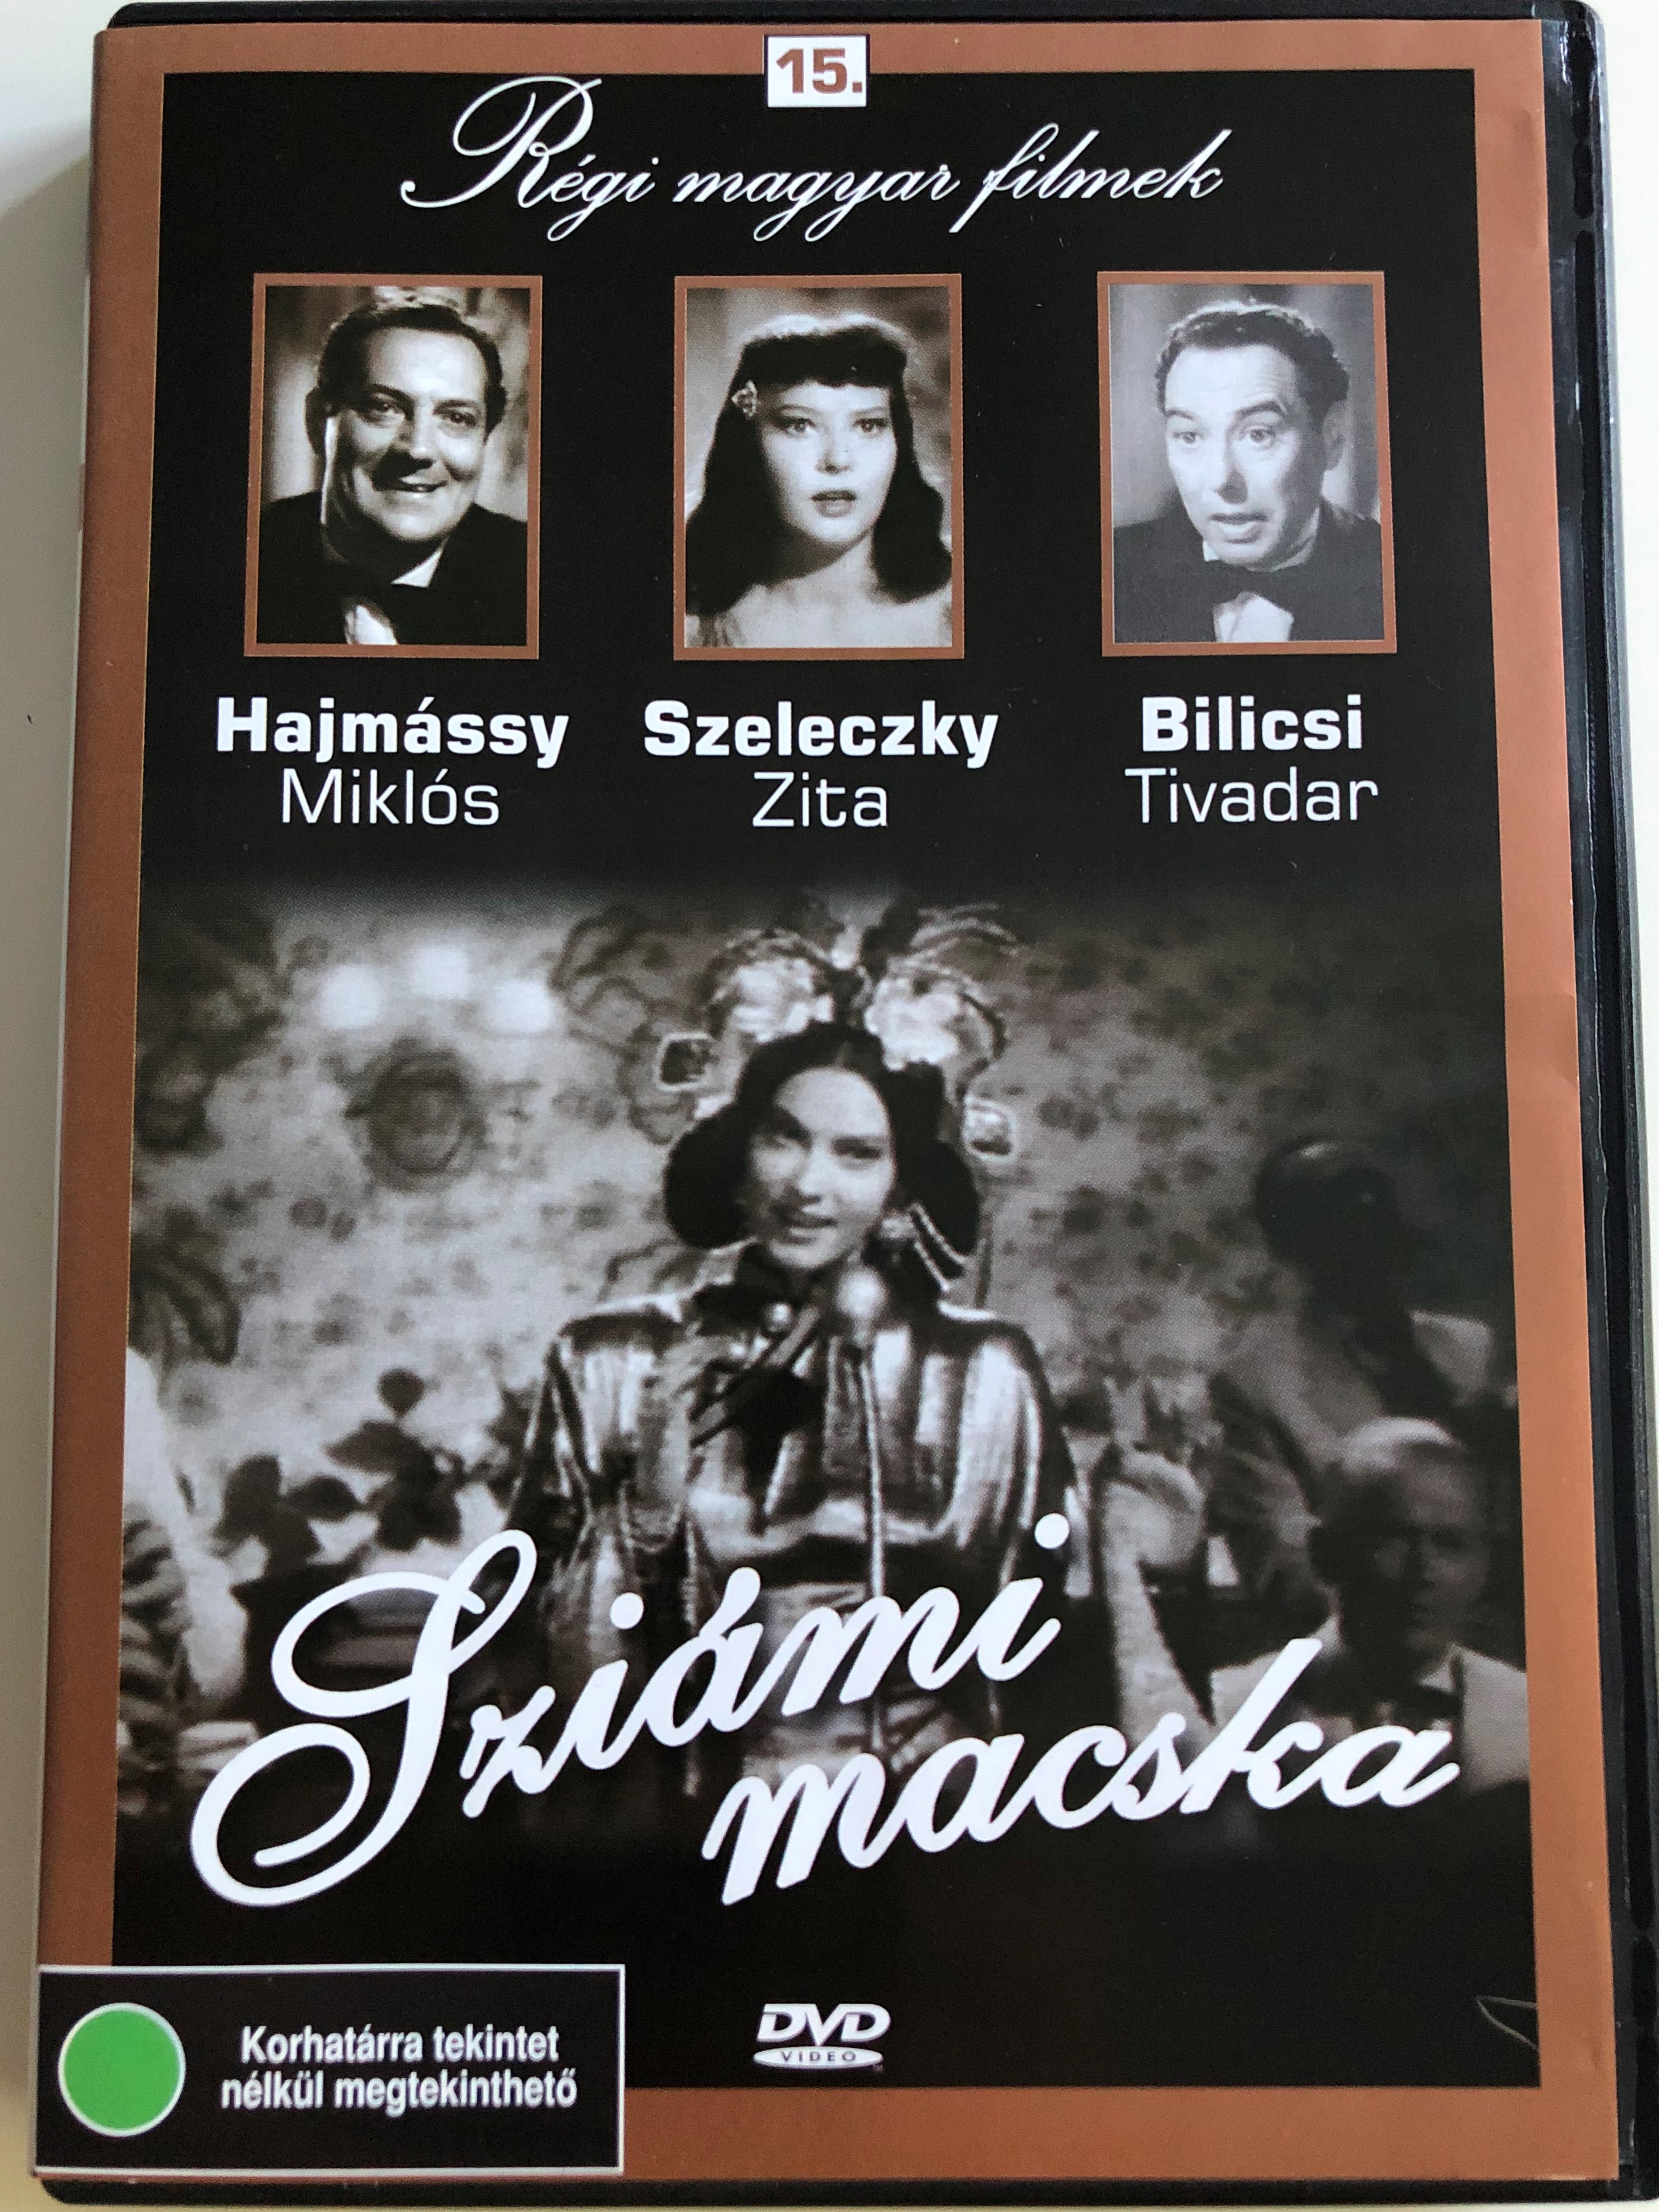 szi-mi-macska-dvd-1943-directed-by-kalm-r-l-szl-starring-szeleczky-zita-bilicsi-tivadar-hajm-ssy-mikl-s-erd-lyi-mici-m-kl-ry-zolt-n-r-gi-magyar-filmek-15.-old-hungarian-movies-black-white-1-.jpg